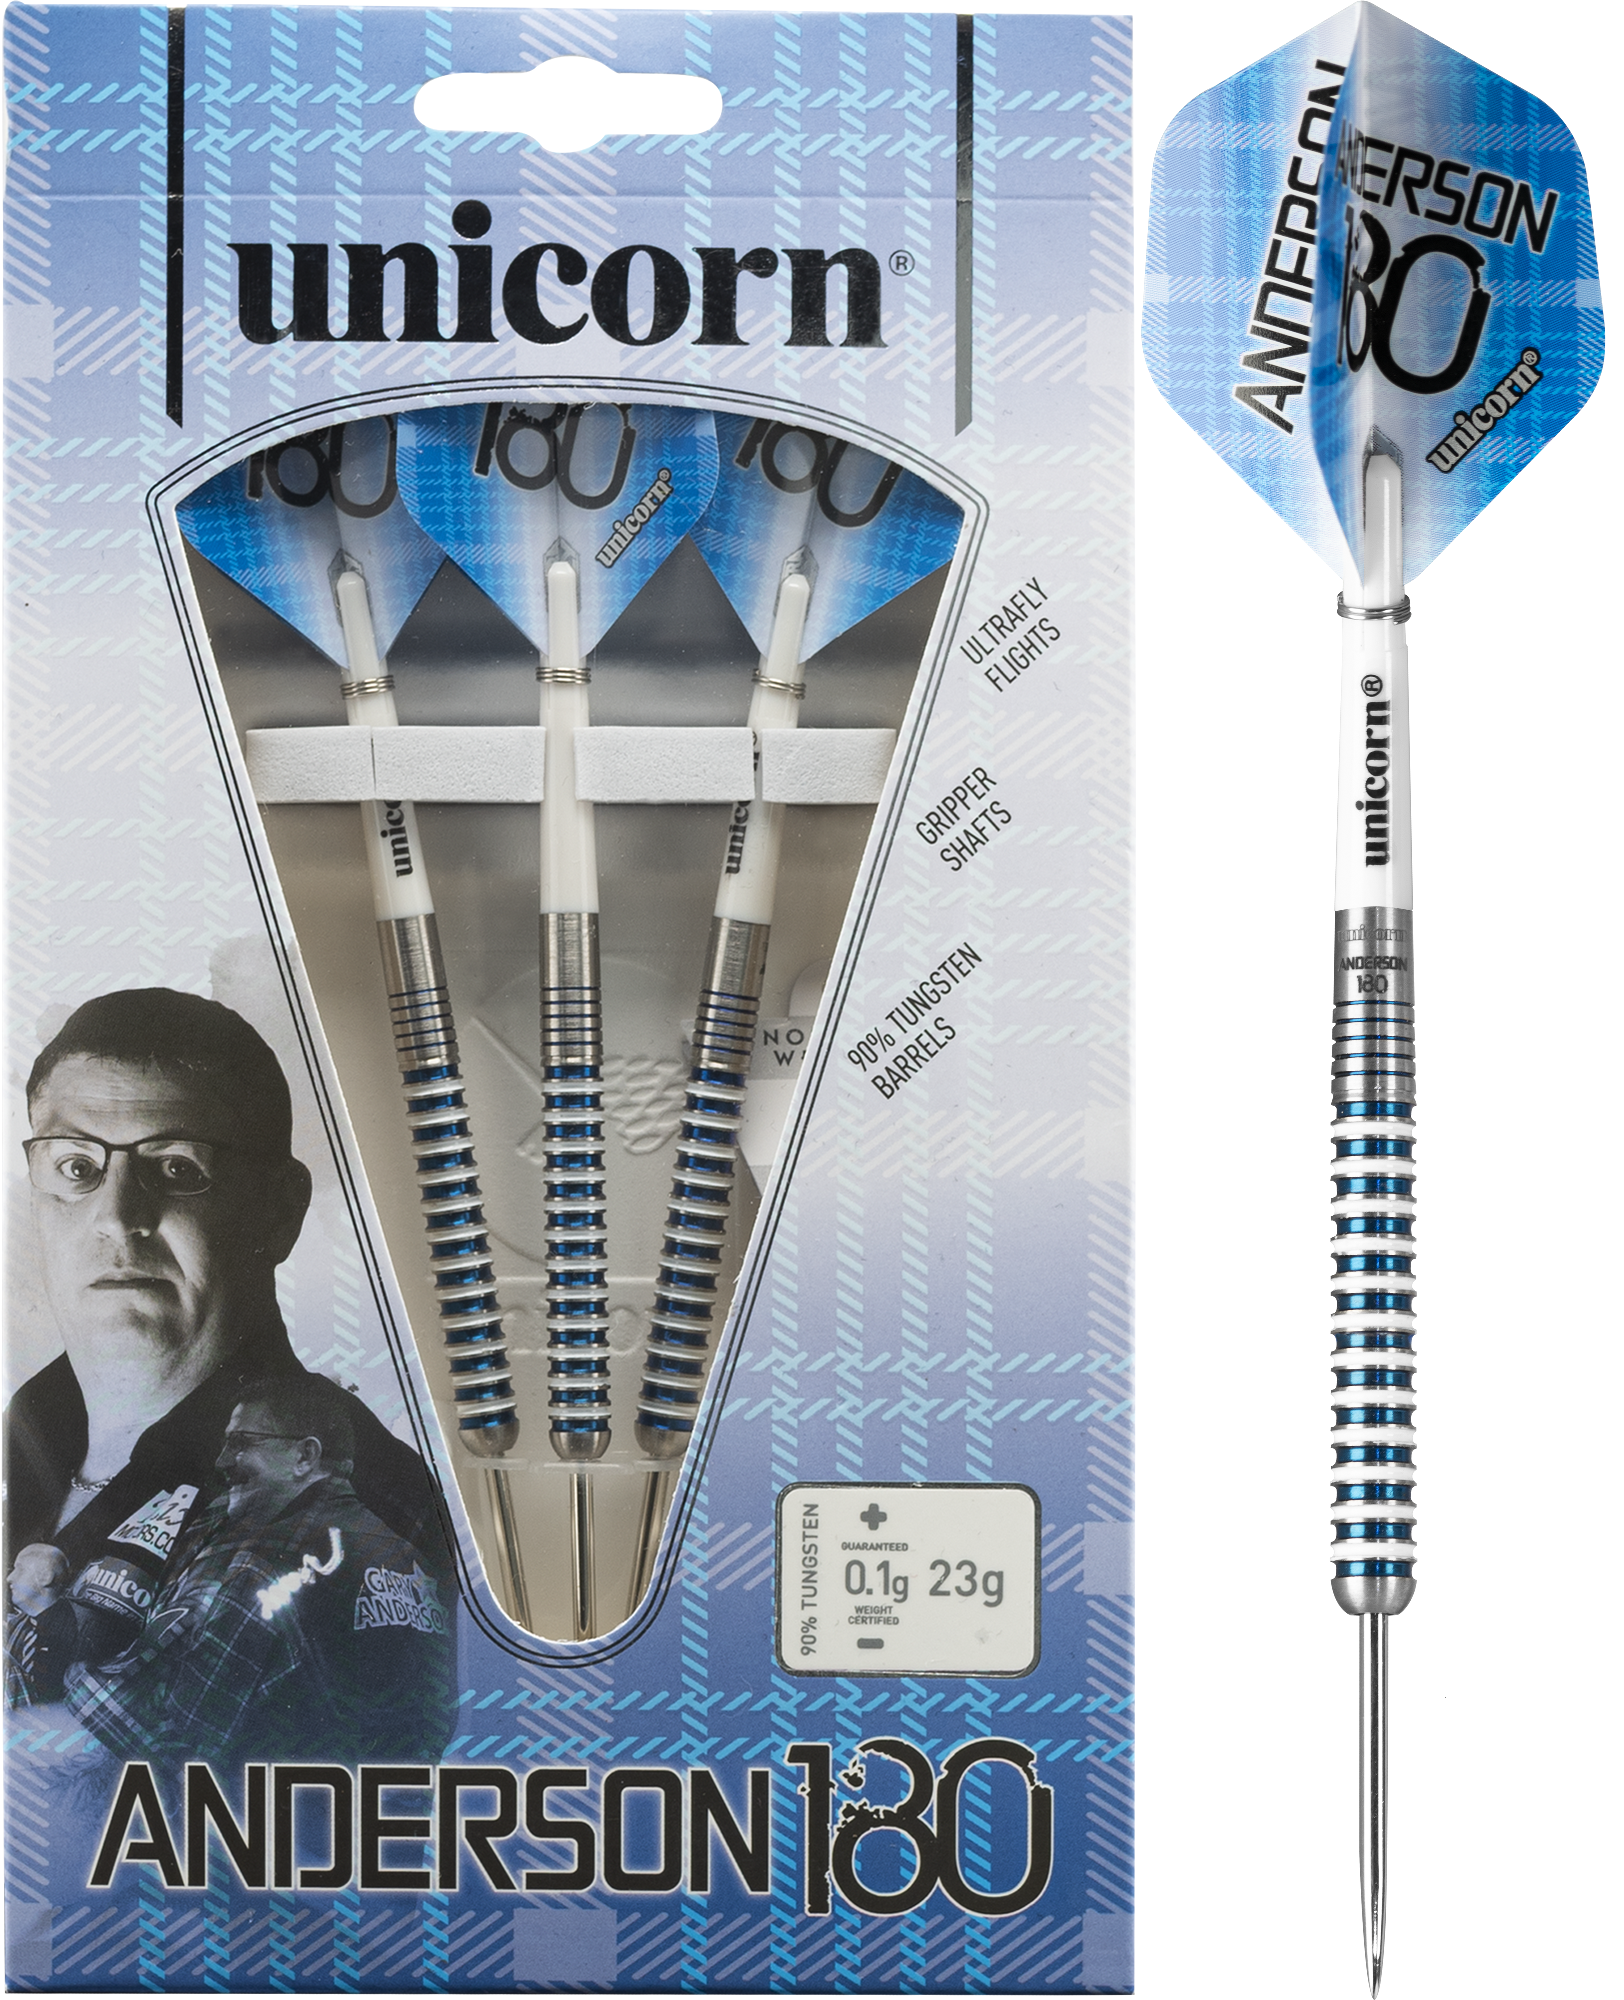 Unicorn Gary Anderson 180 90% - Steeldarts